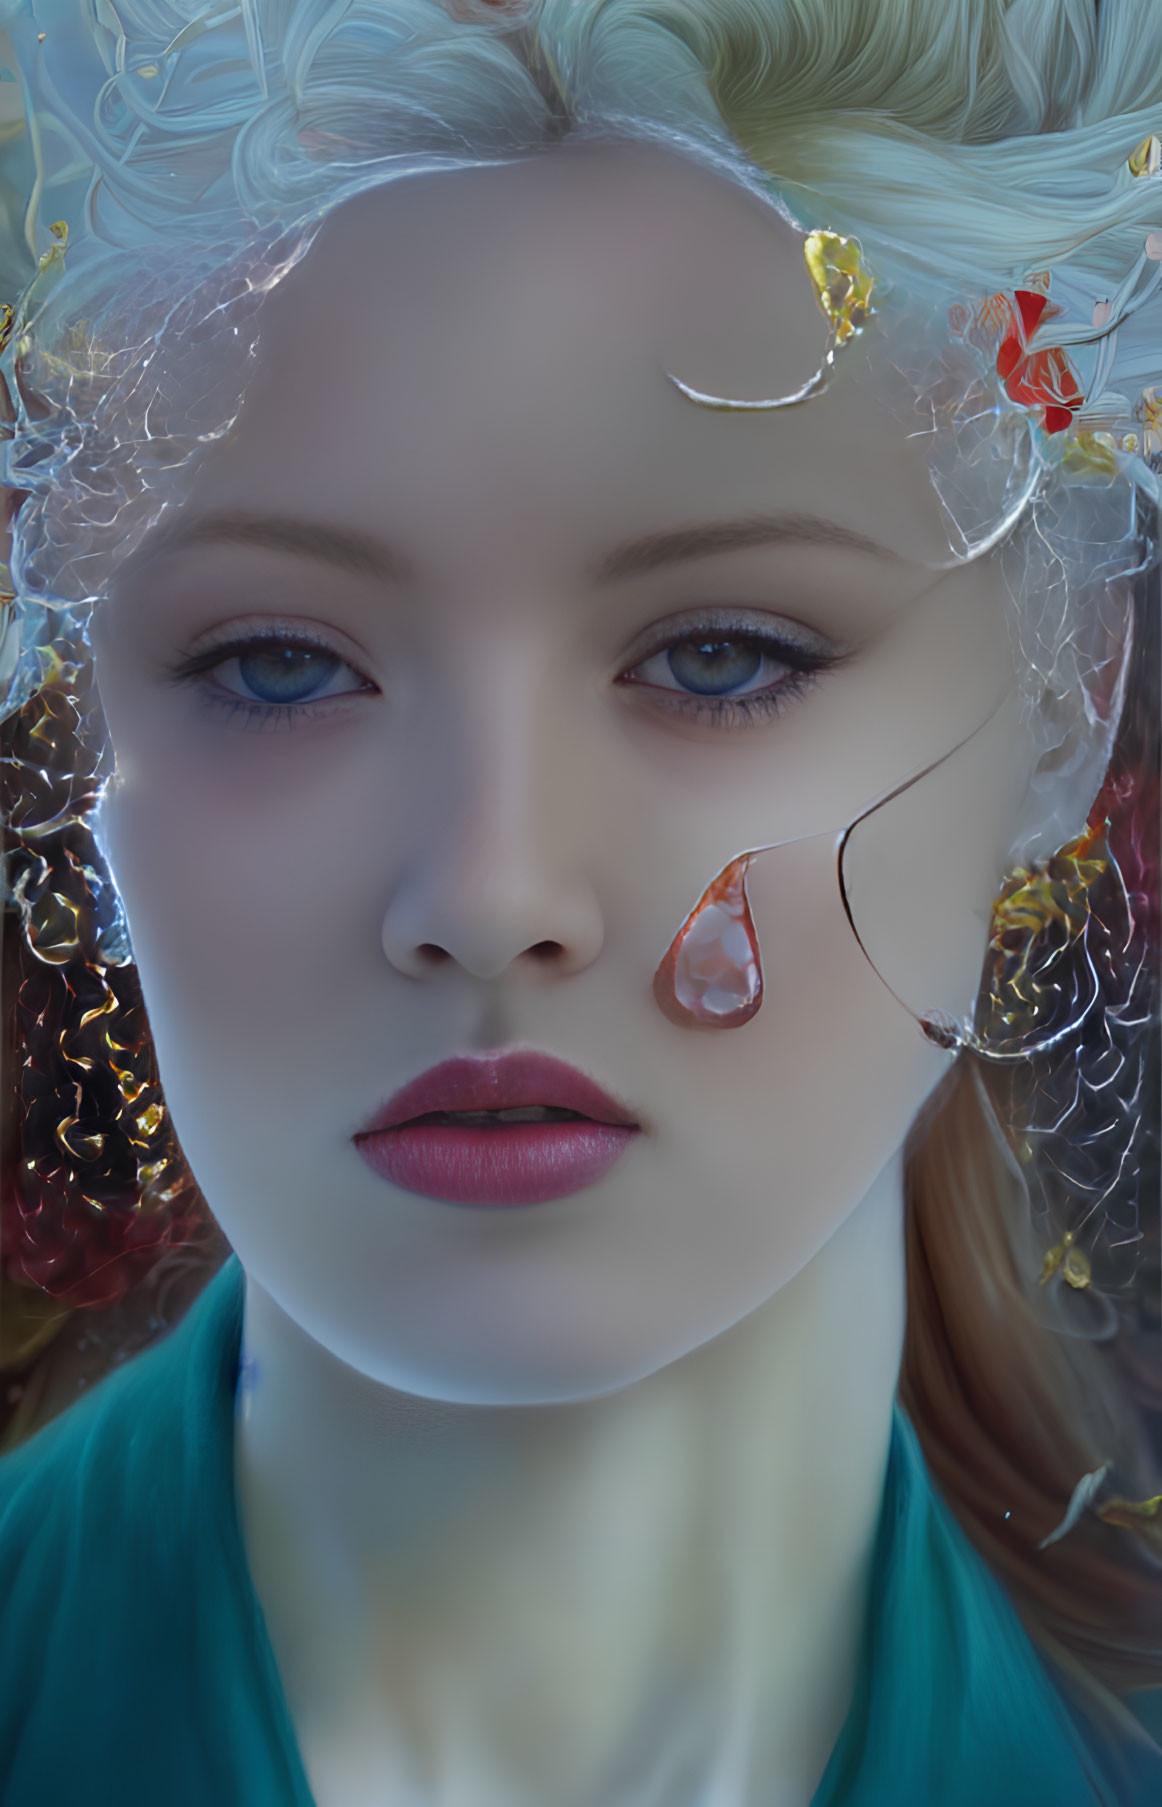 Digital Art: Woman with Fair Skin, Blue Eyes, Blonde Curly Hair